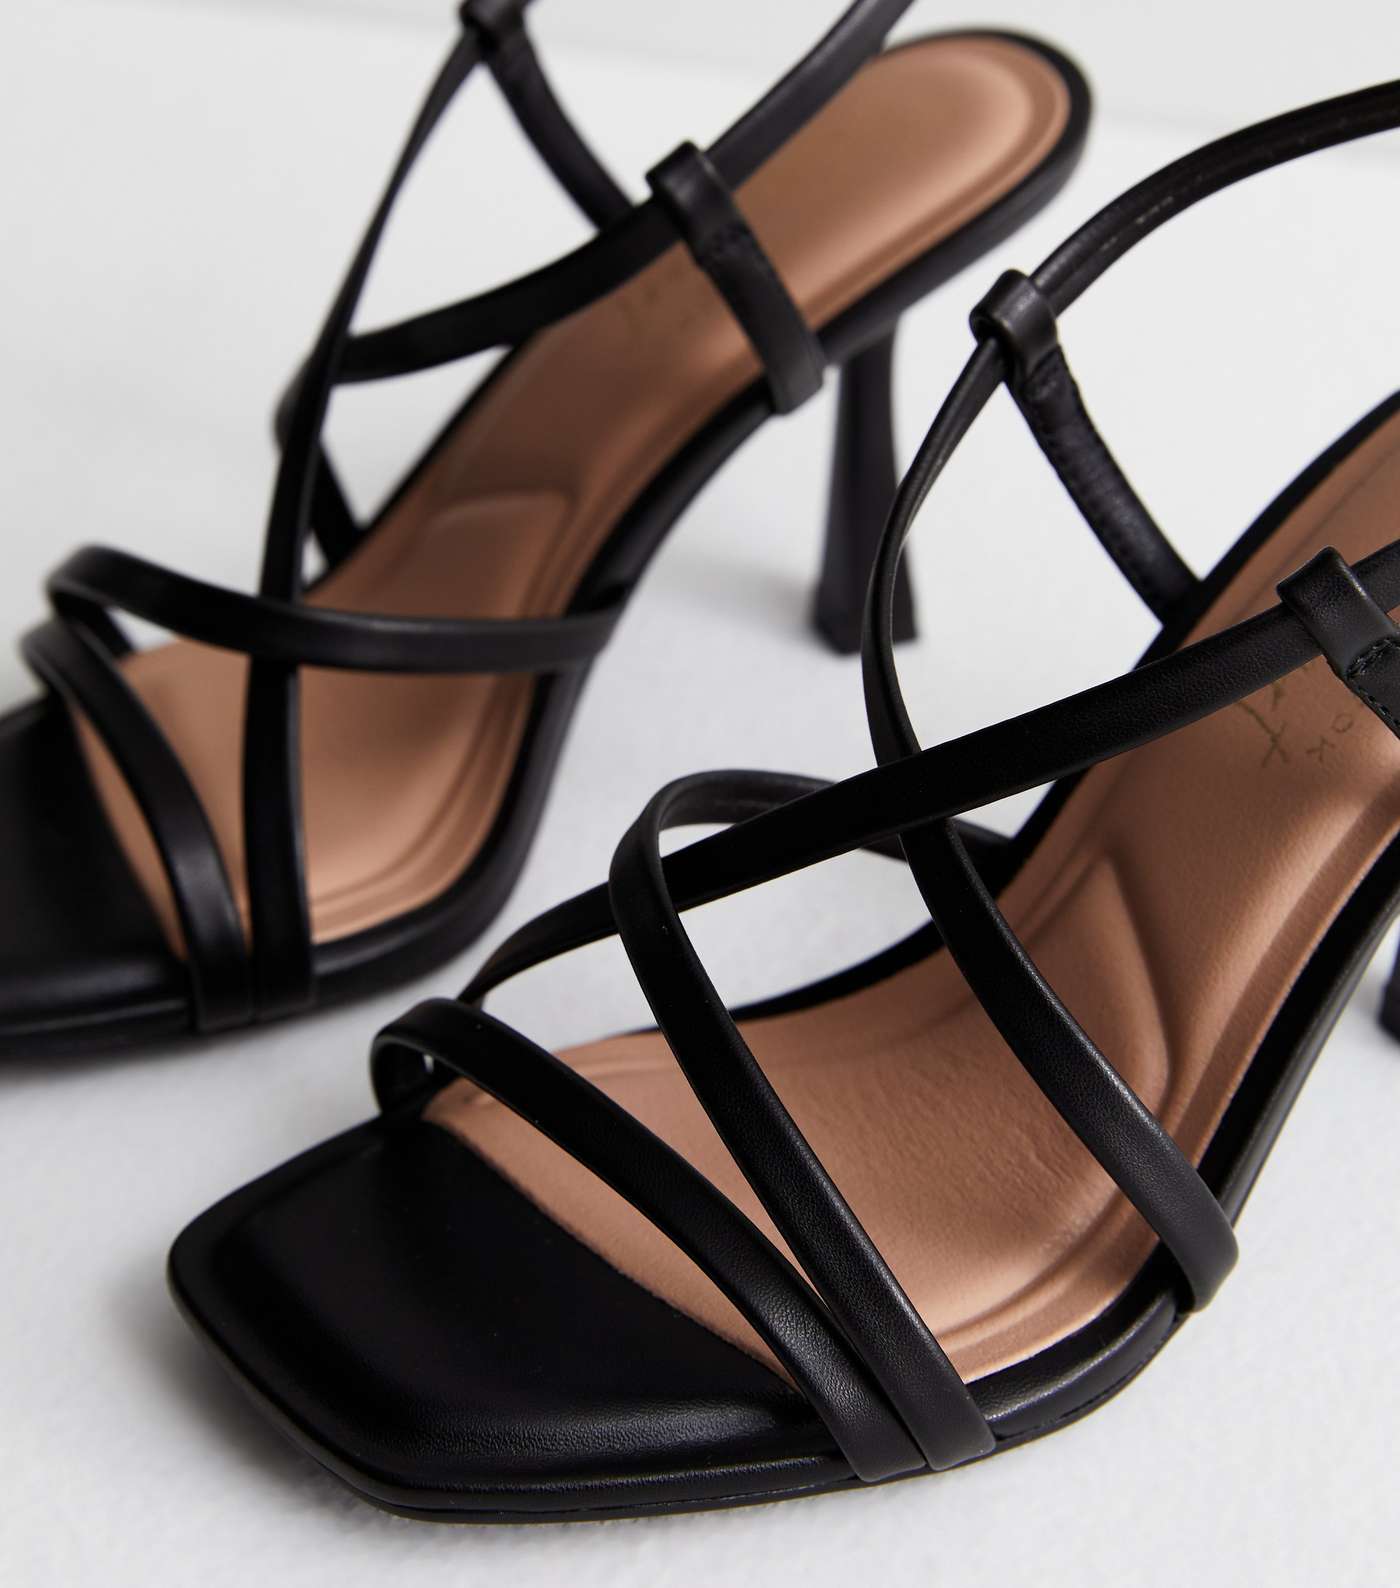 Wide Fit Black Strappy Stiletto Heel Sandals Image 5